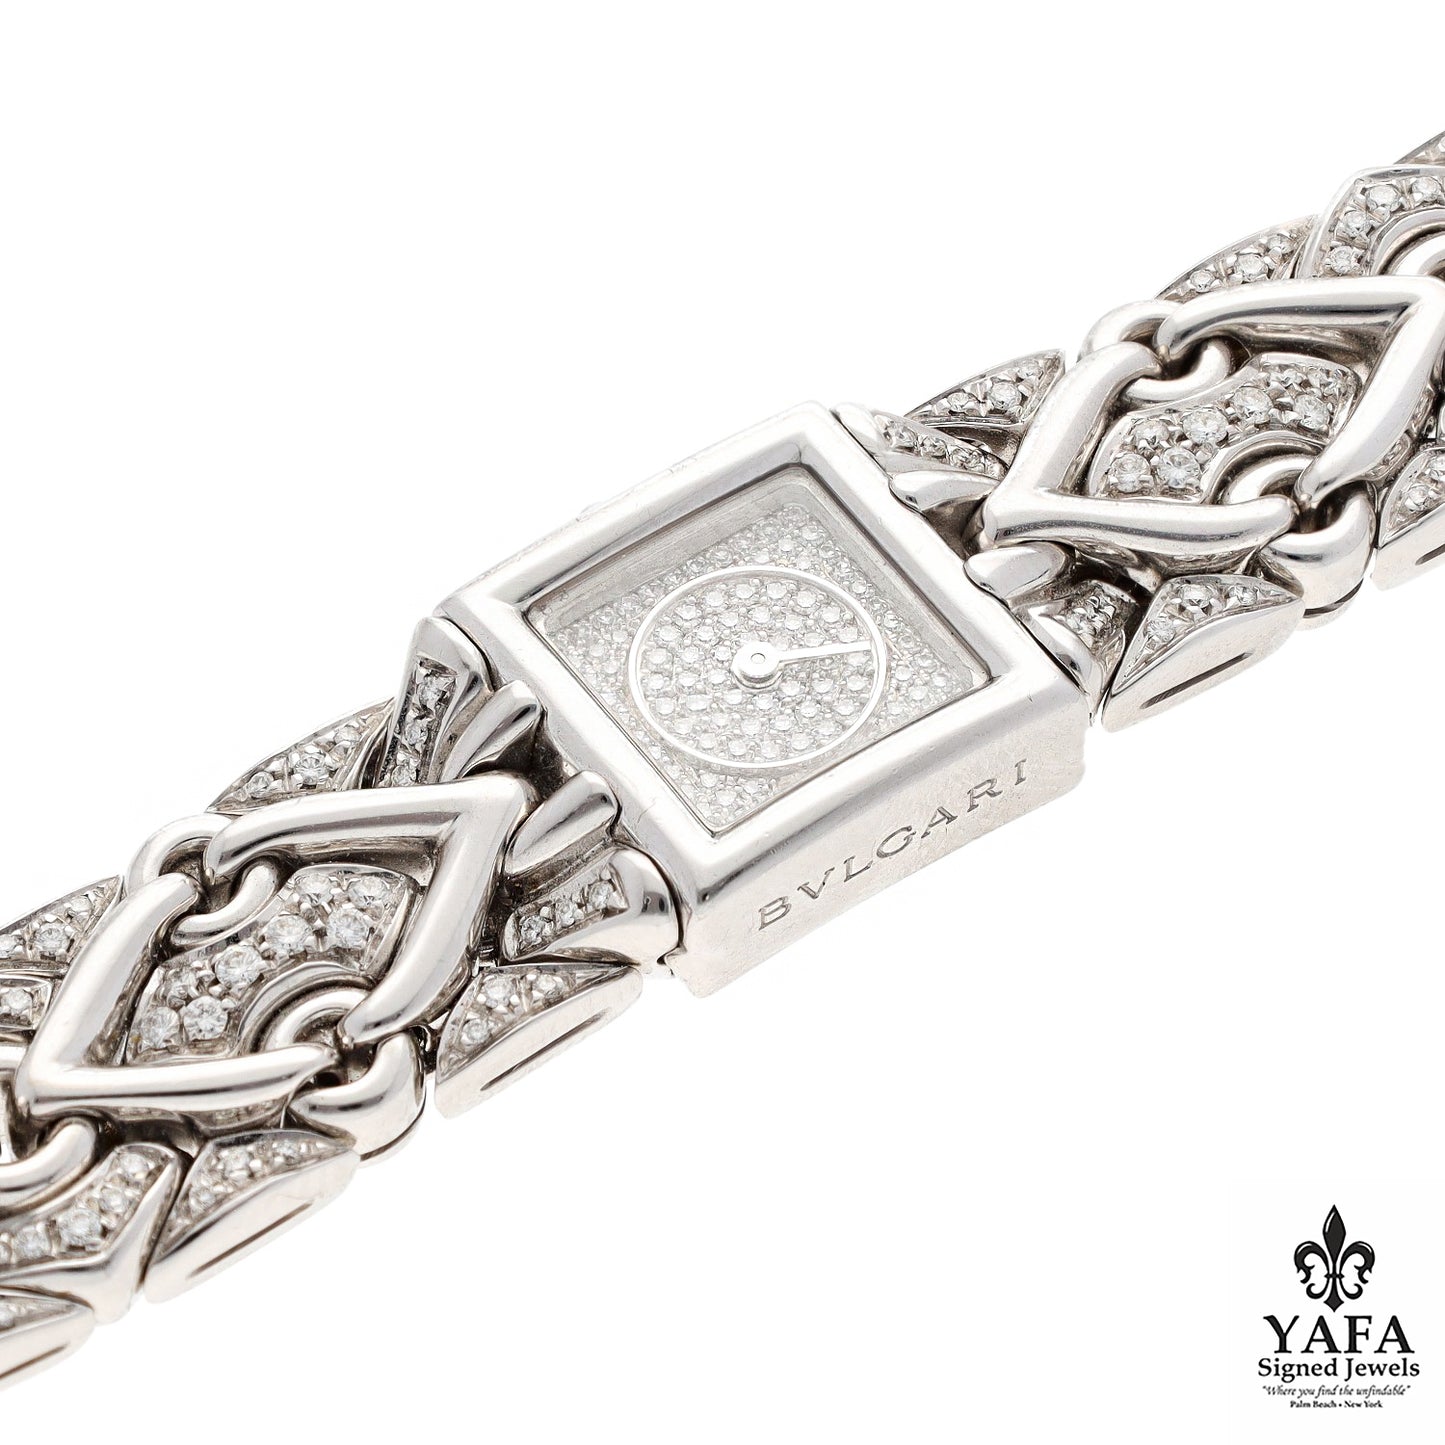 BVLGARI Trika 18K White Gold All Diamond Pave Watch